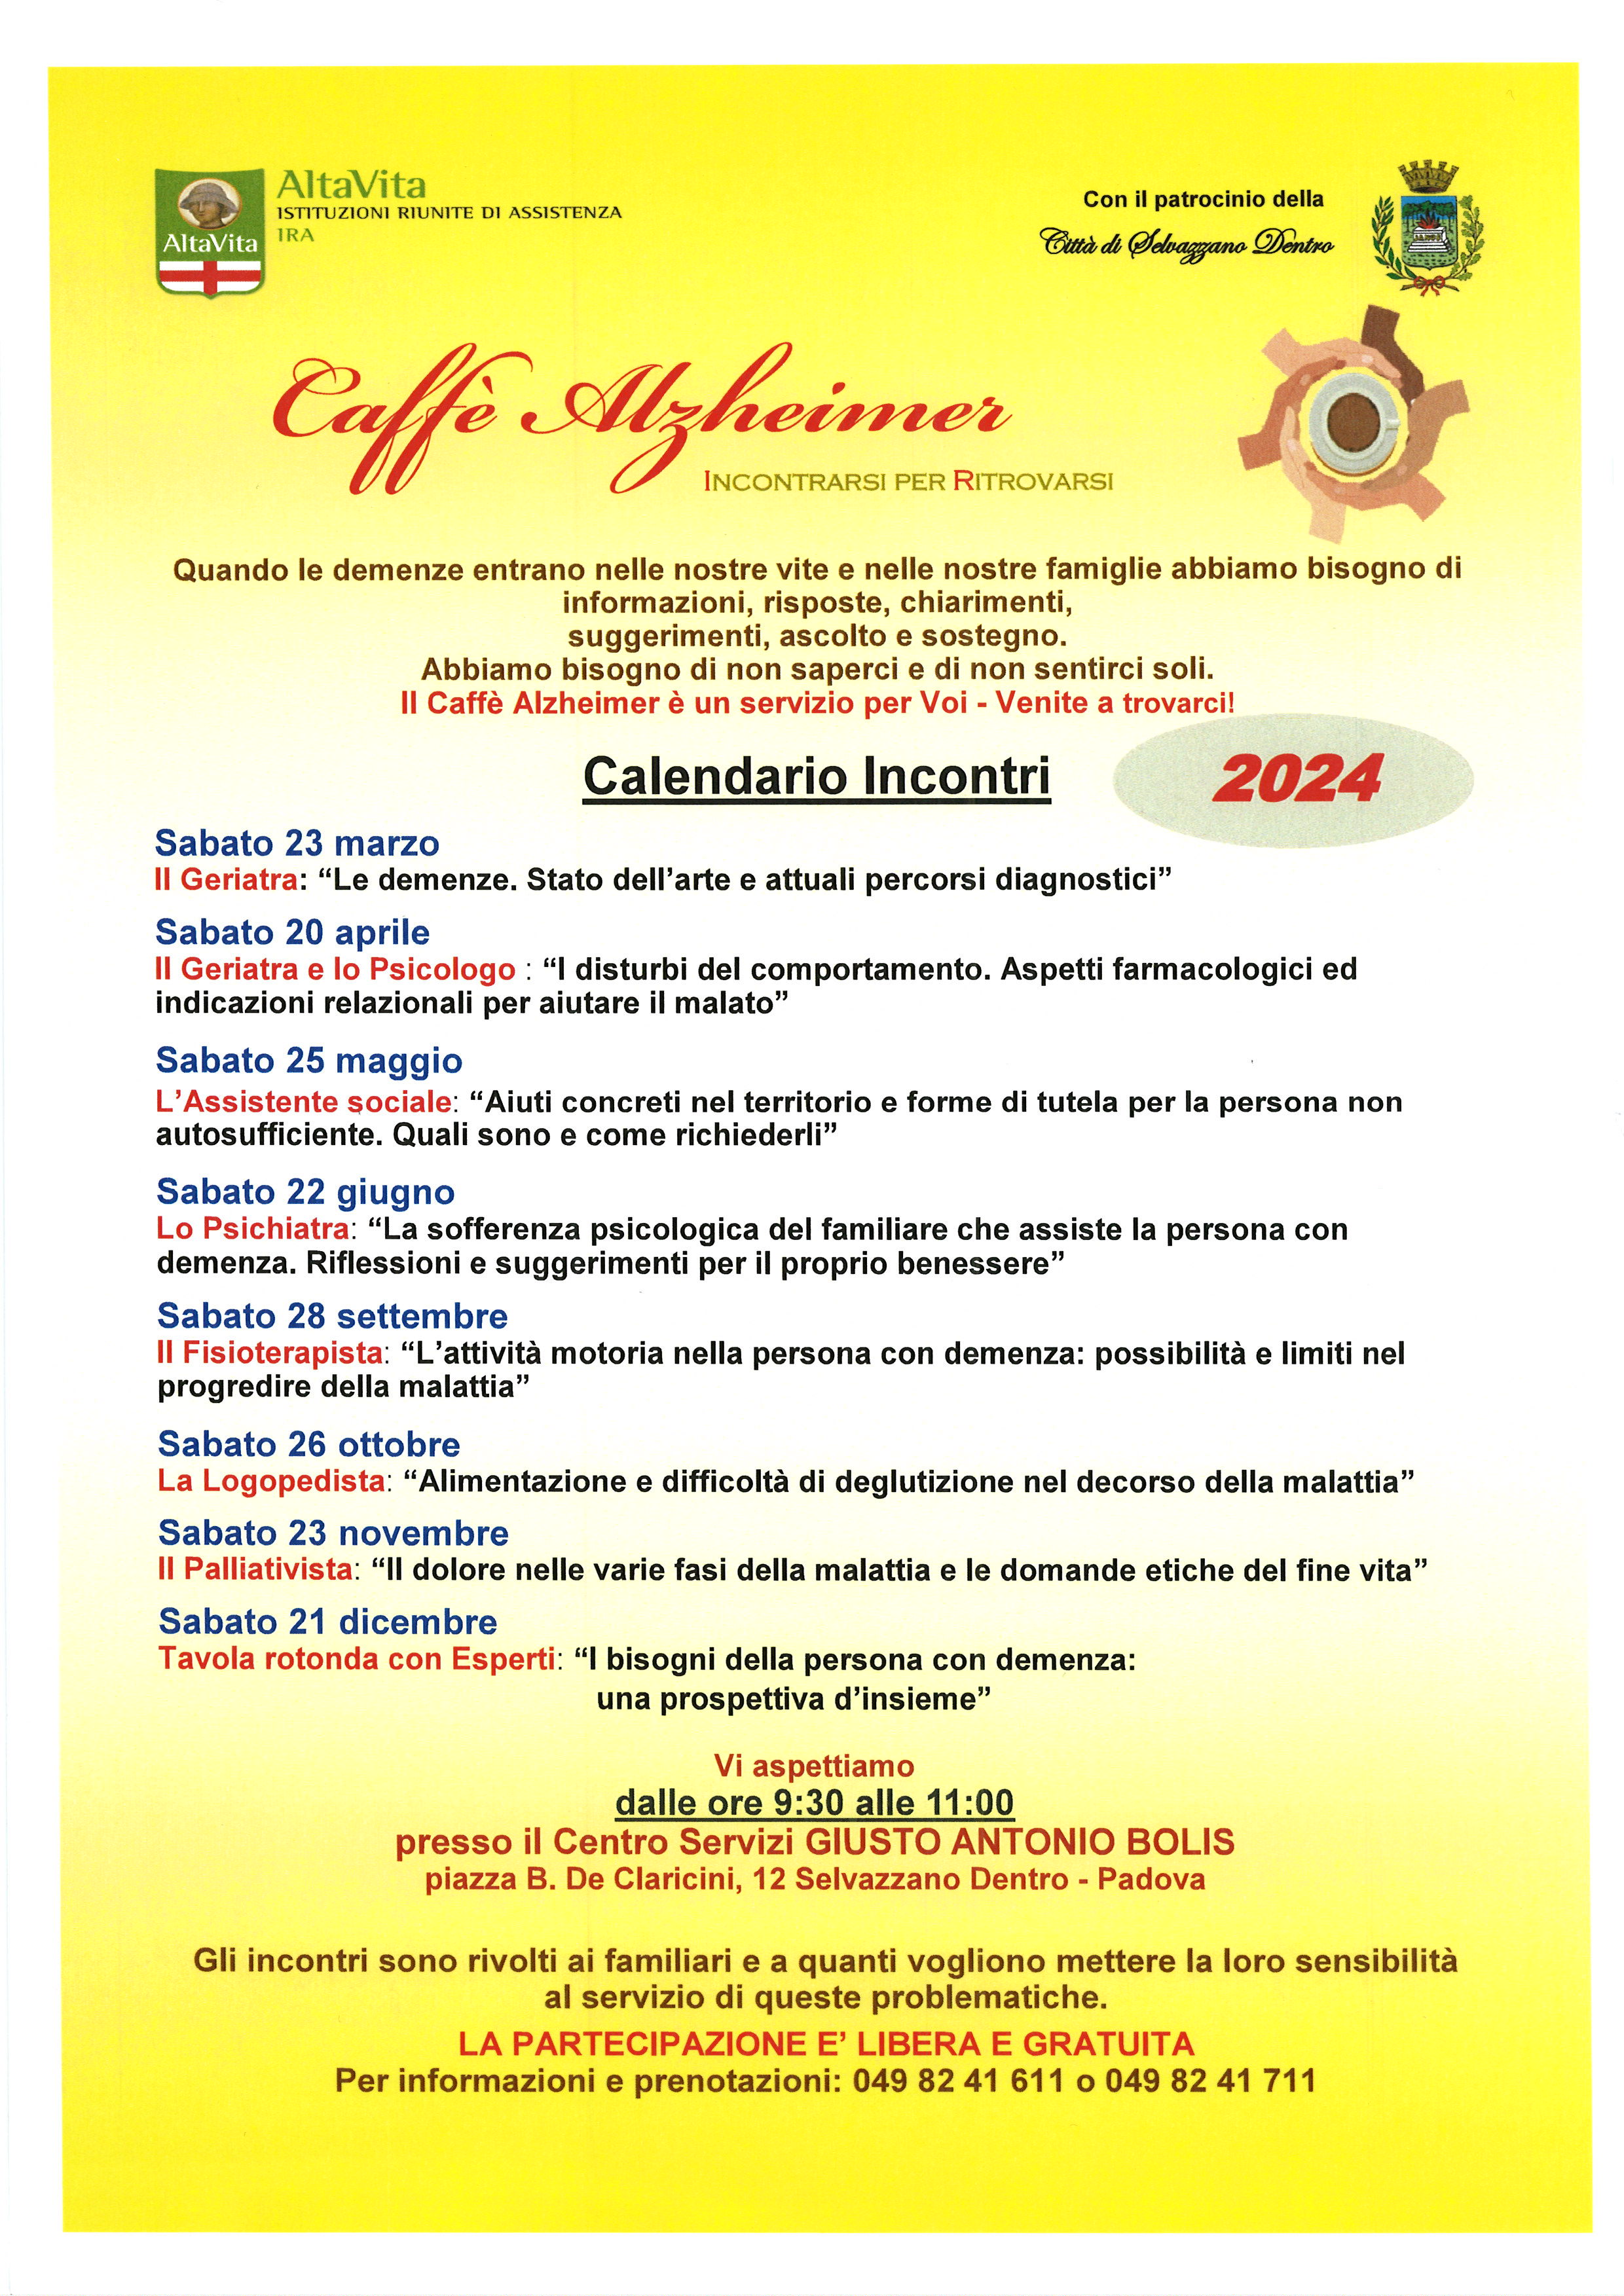 Calendario Incontri Caffe’ Alzheimer anno 2024 presso C.S. Bolis